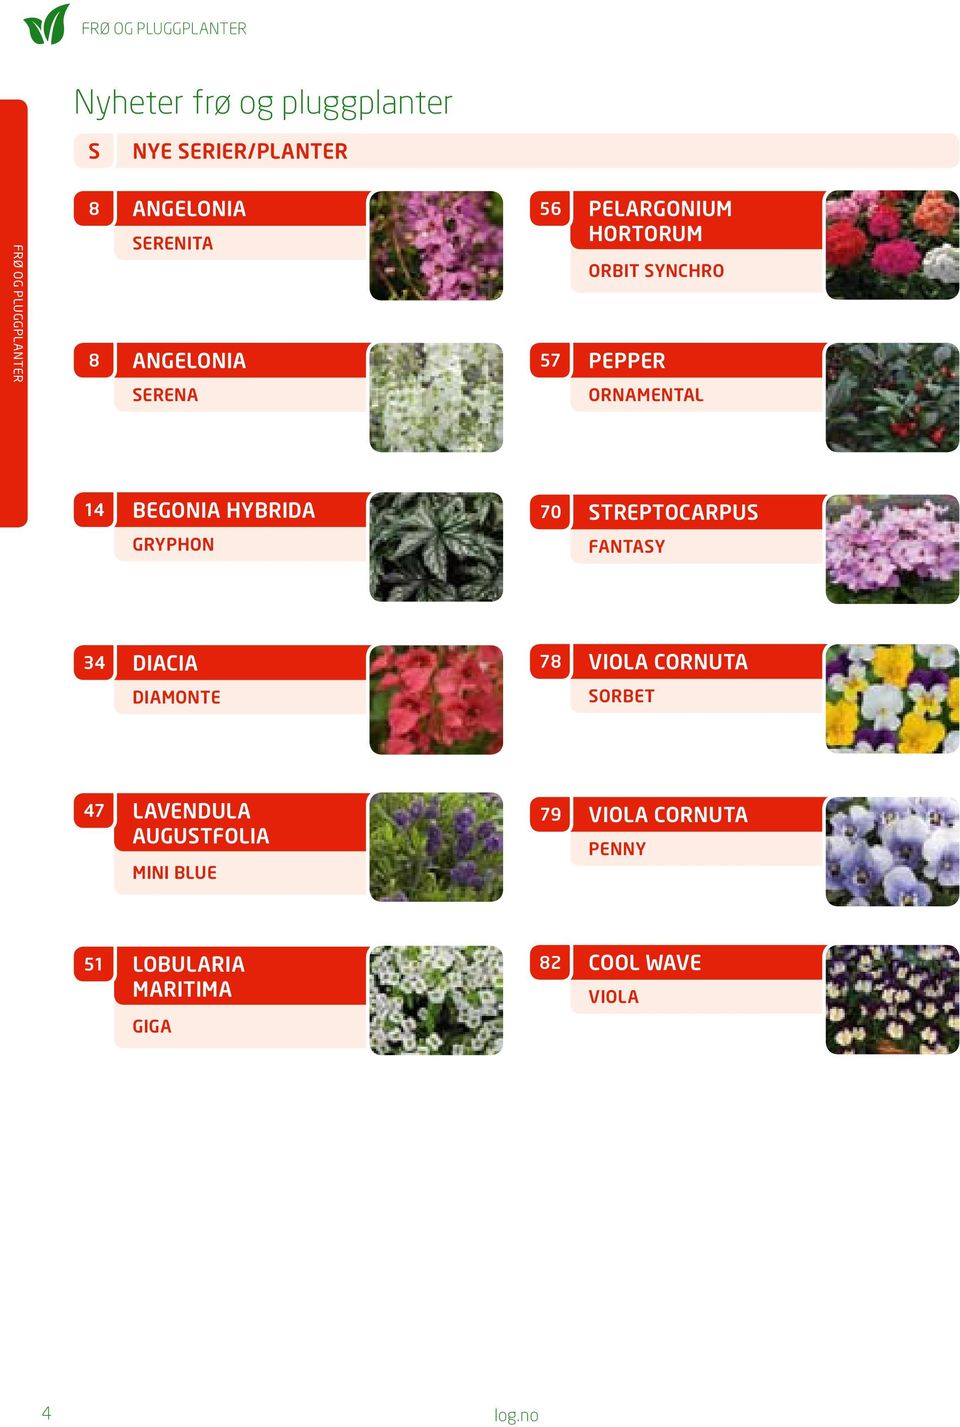 begonia hybrida 70 streptocarpus gryphon fantasy diacia 78 viola cornuta diamonte sorbet 7